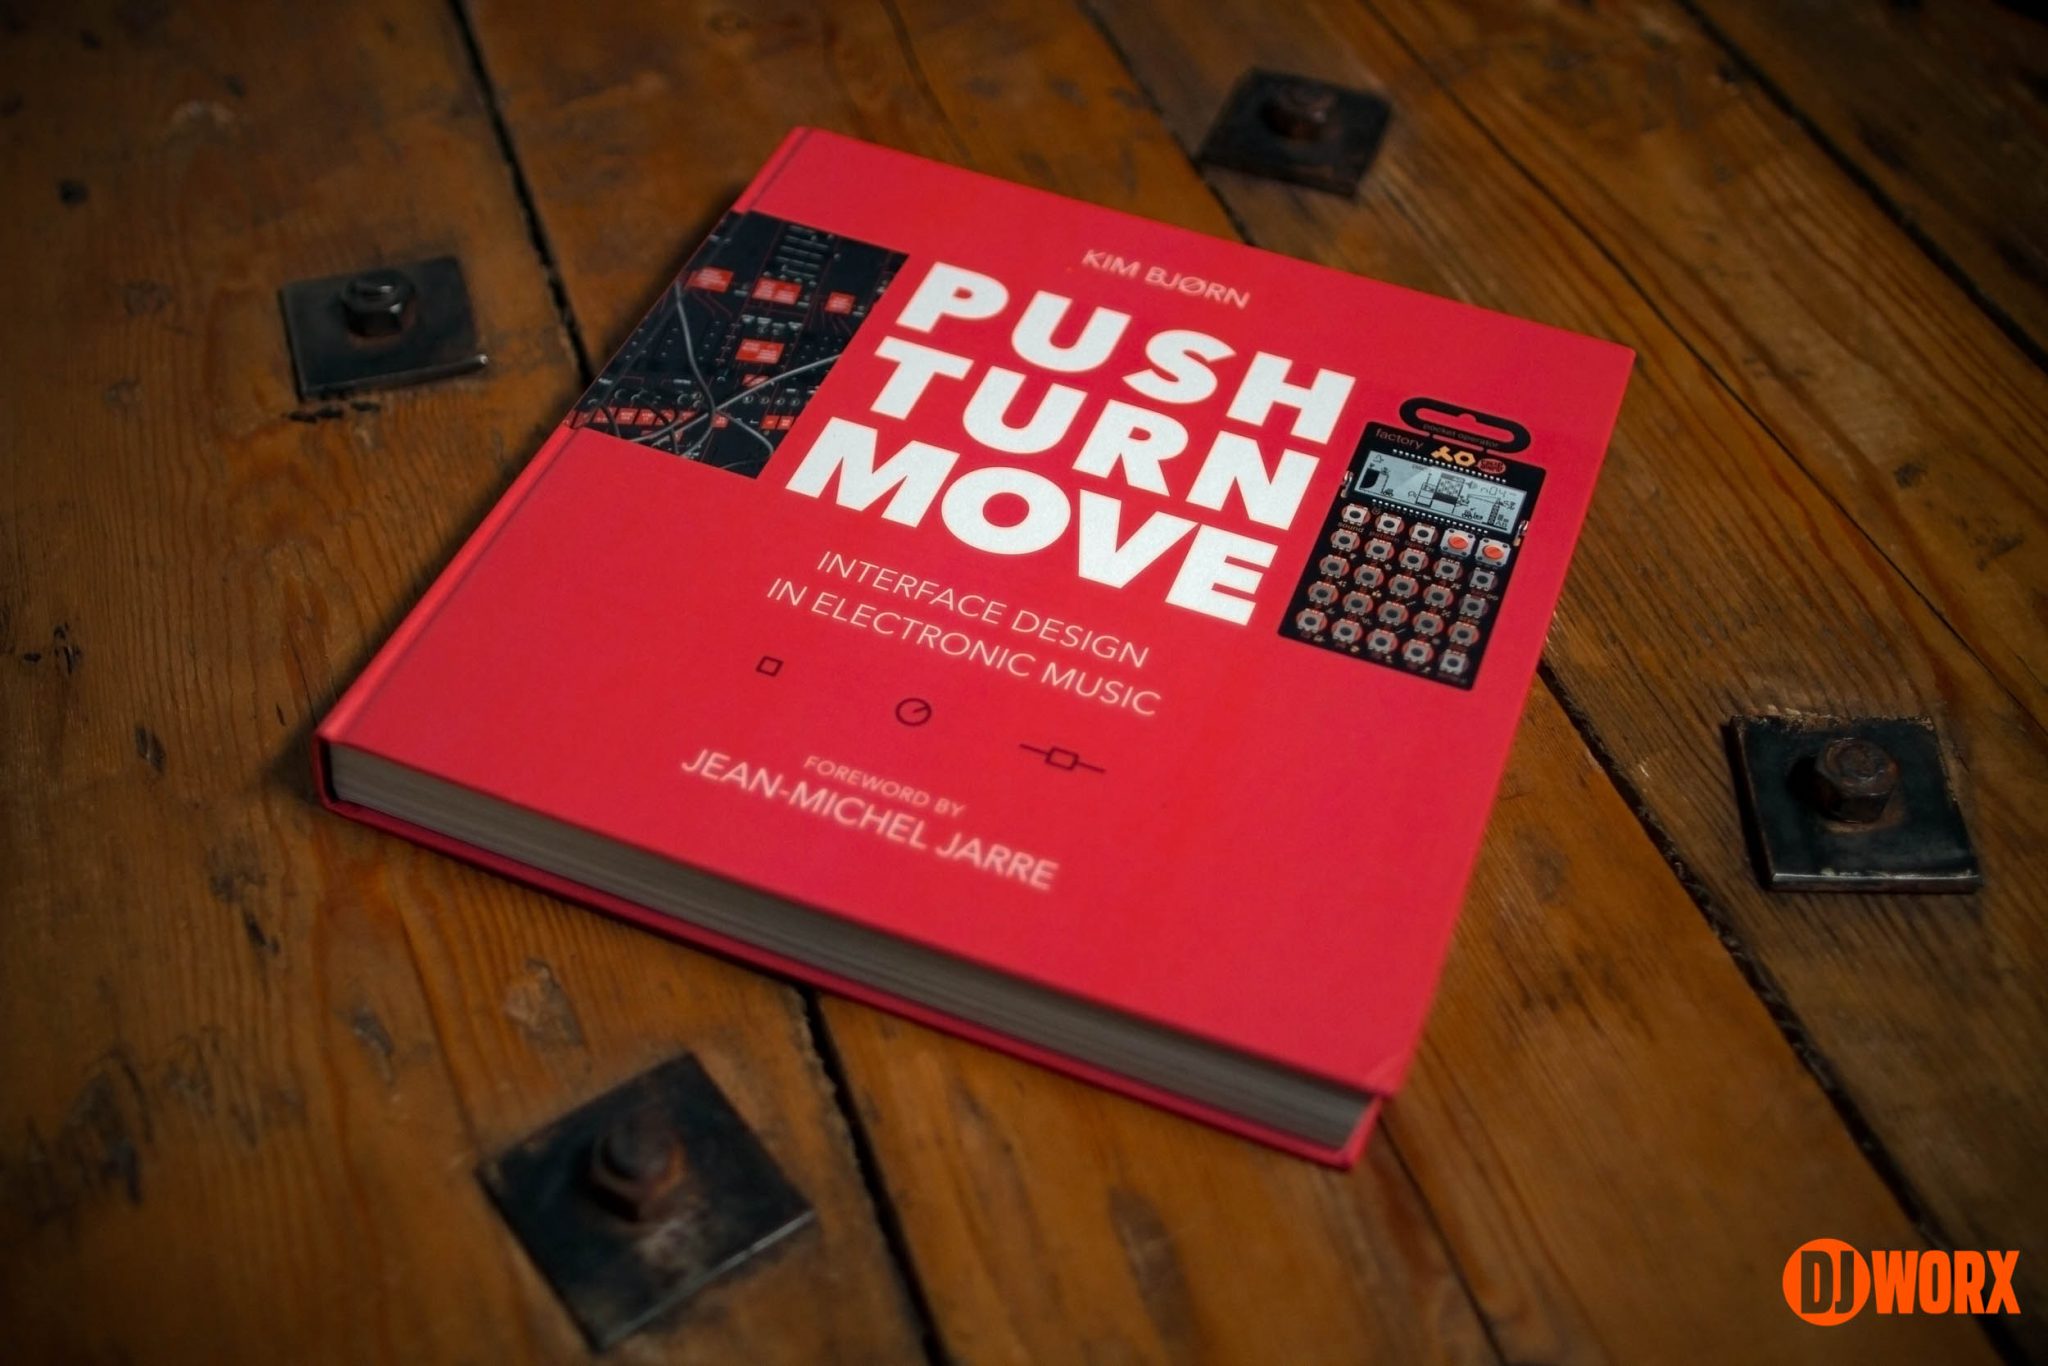 Push Turn Move Book Kim Bjorn (1)